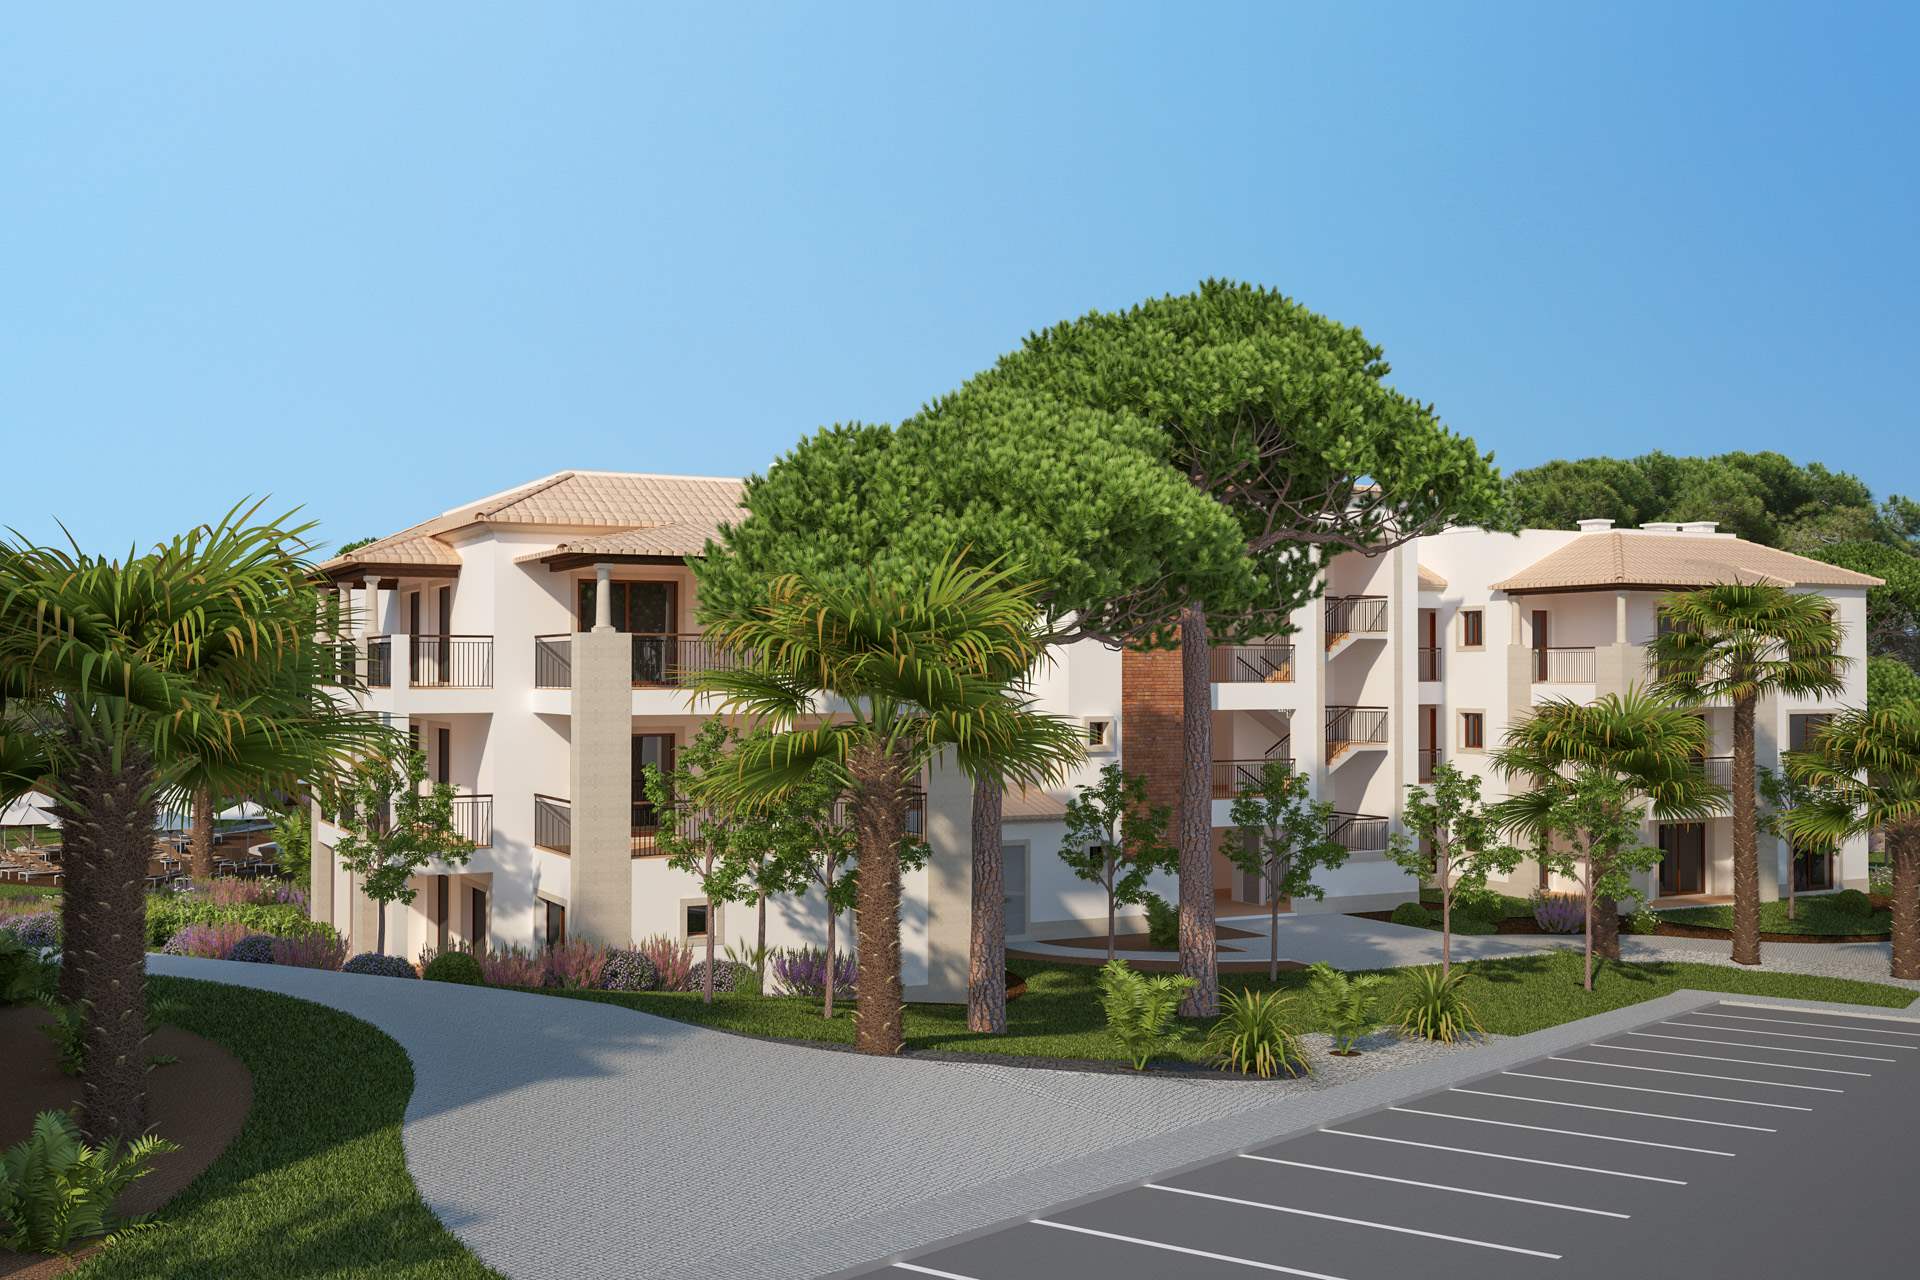 Pine Cliffs Gardens, Three Bedroom Suite, S/C Basis, 3 bedroom apartment in Pine Cliffs Resort, Algarve Photo #23